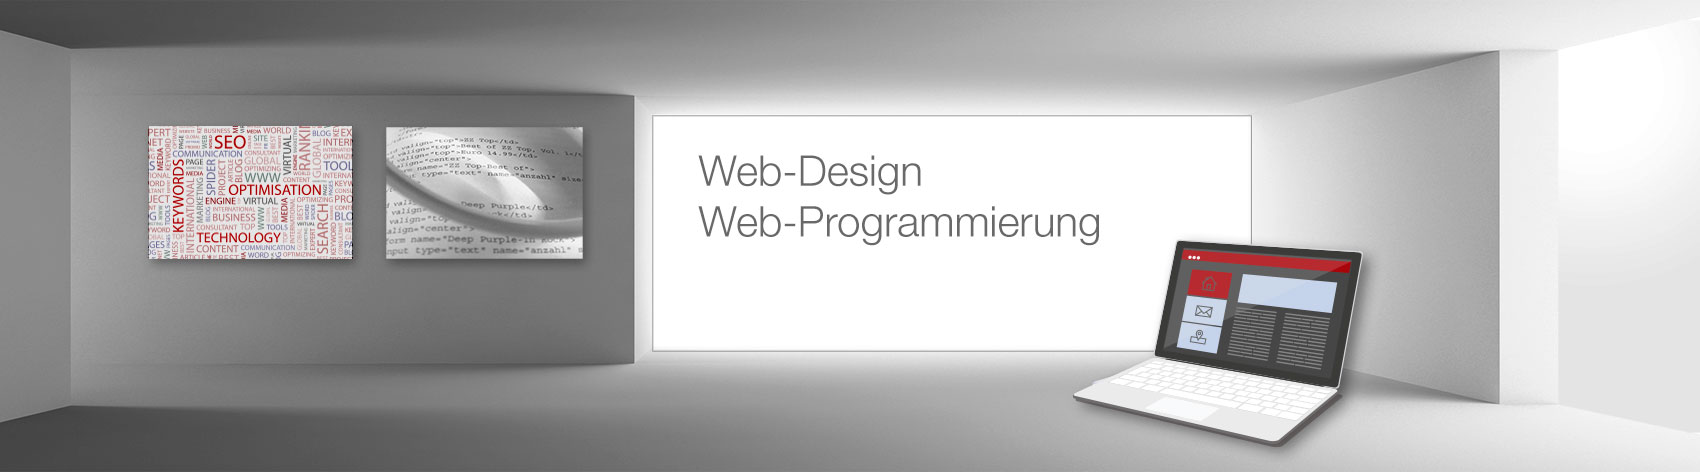 Webdesign, Webprogrammierung